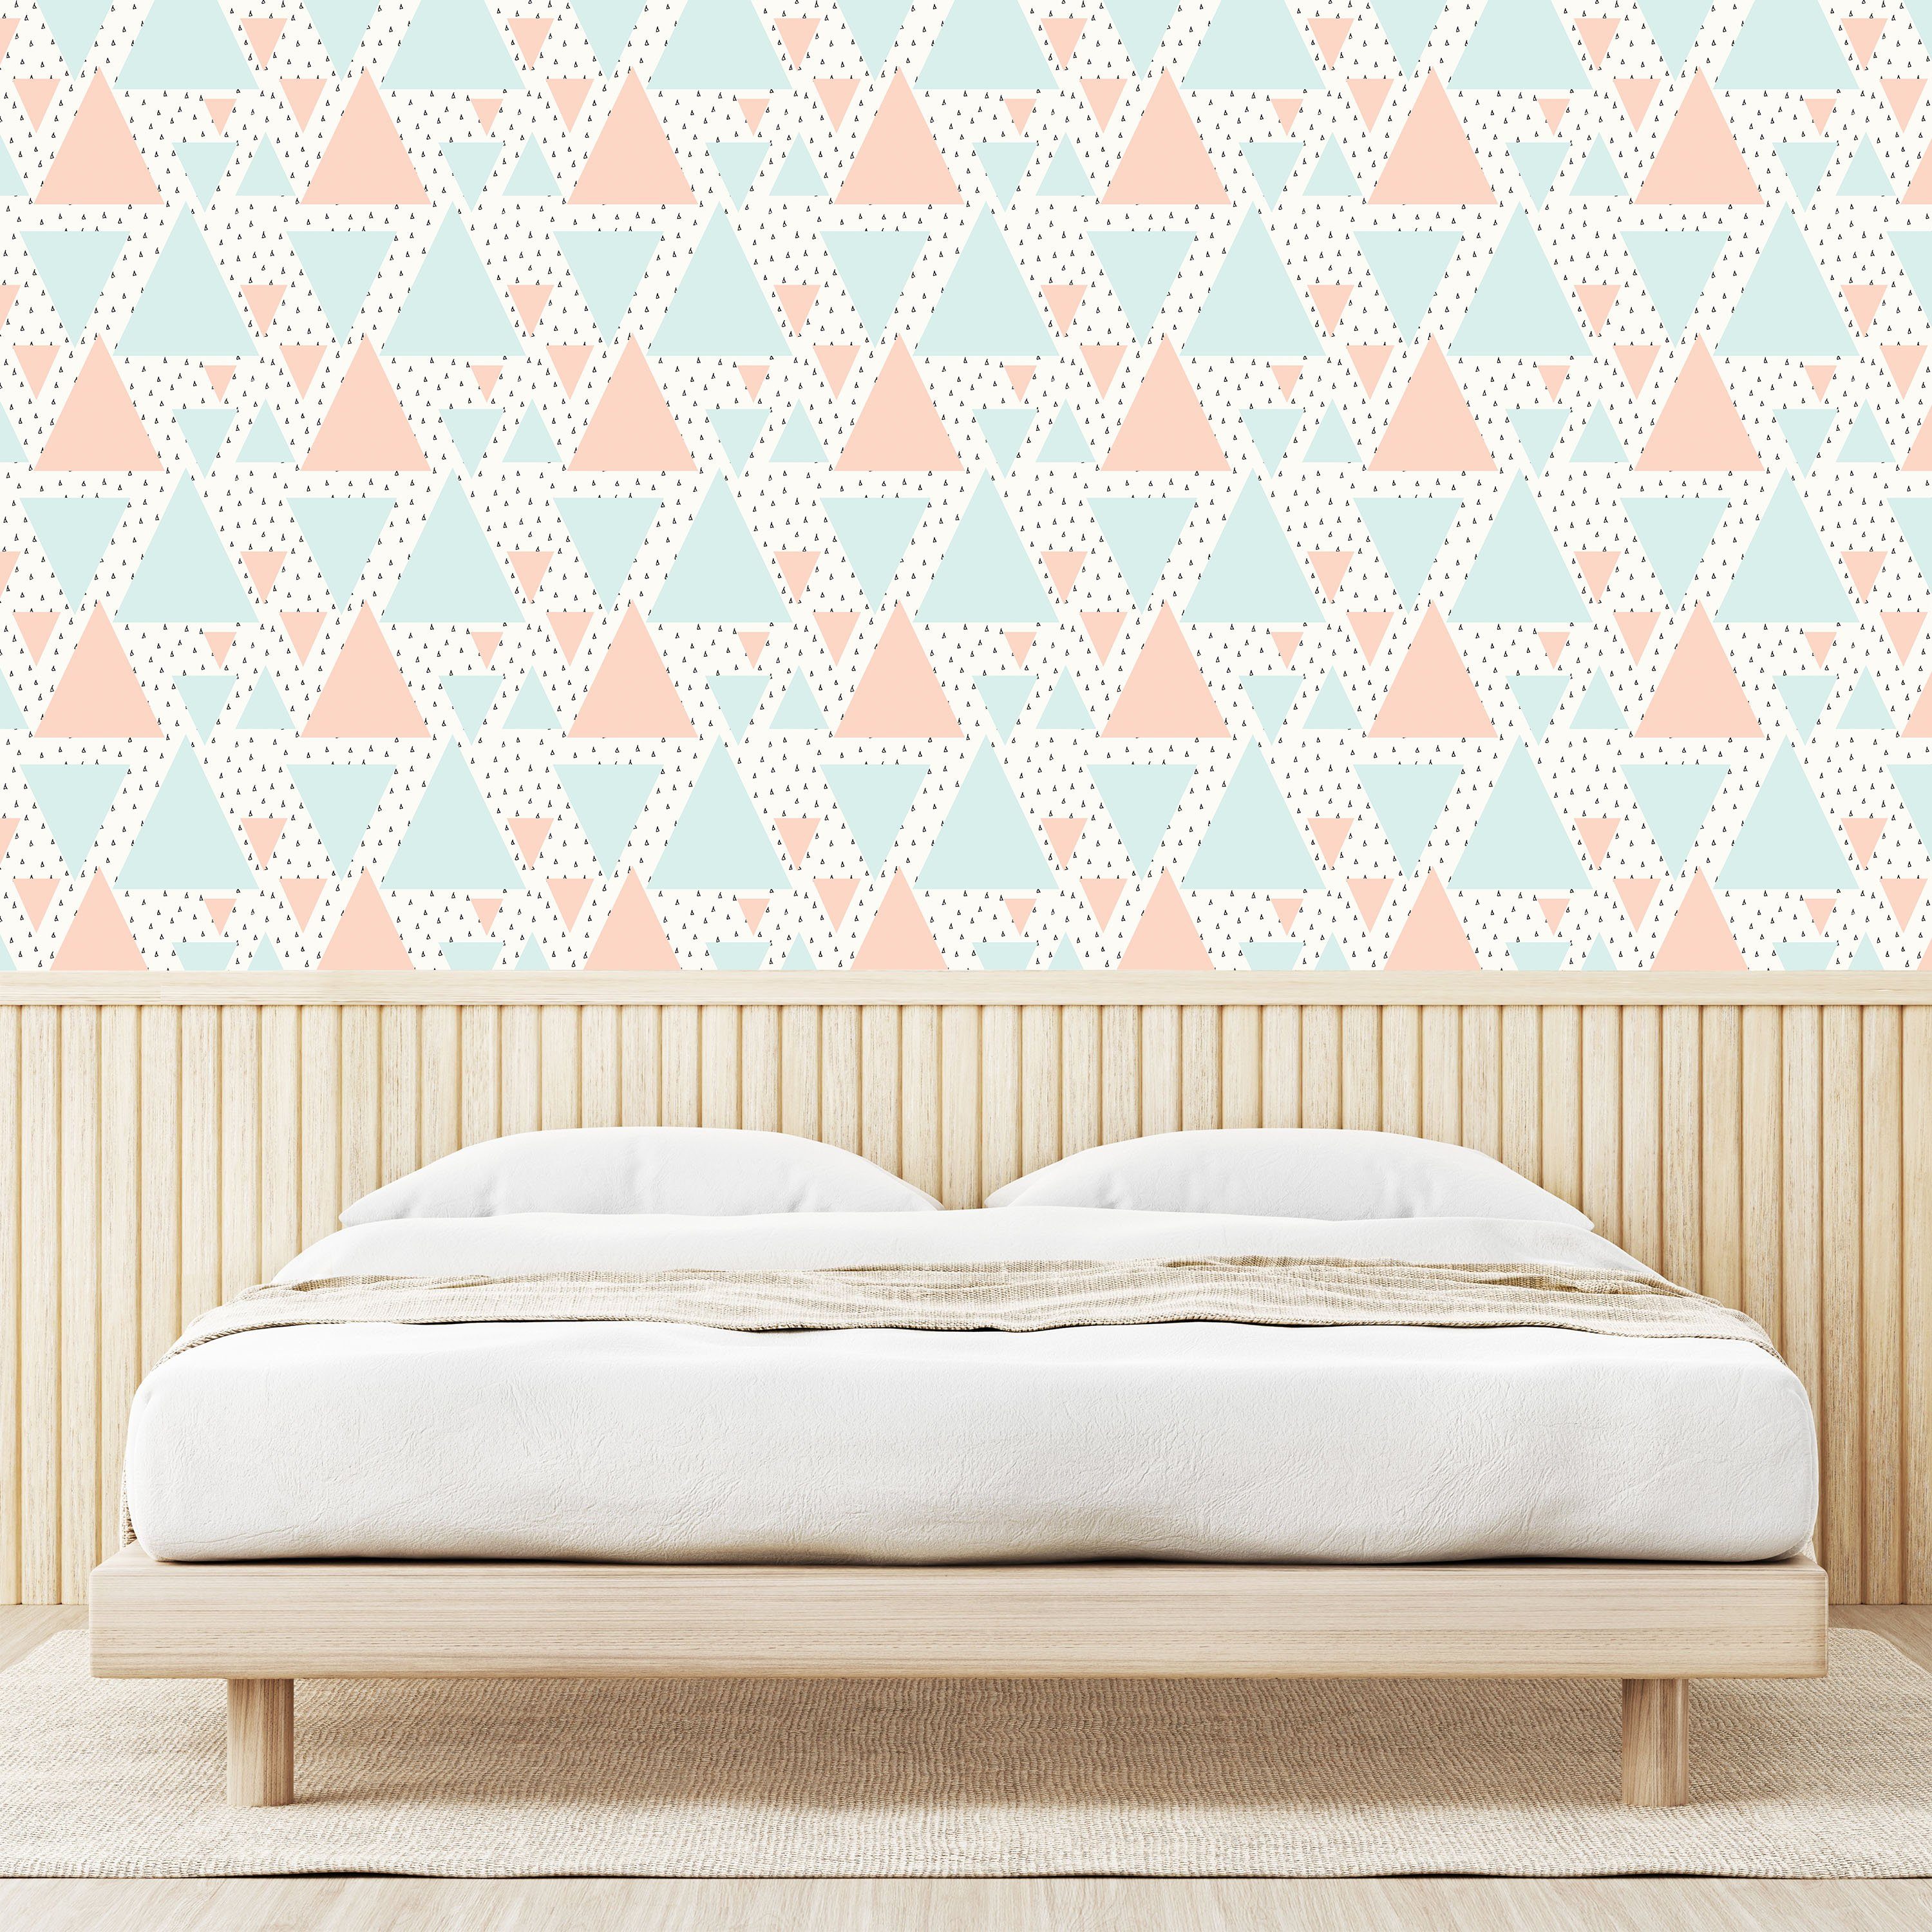 Abakuhaus Vinyltapete selbstklebendes Wohnzimmer Küchenakzent, Deco Farbe Art neutrale Forms Pastel